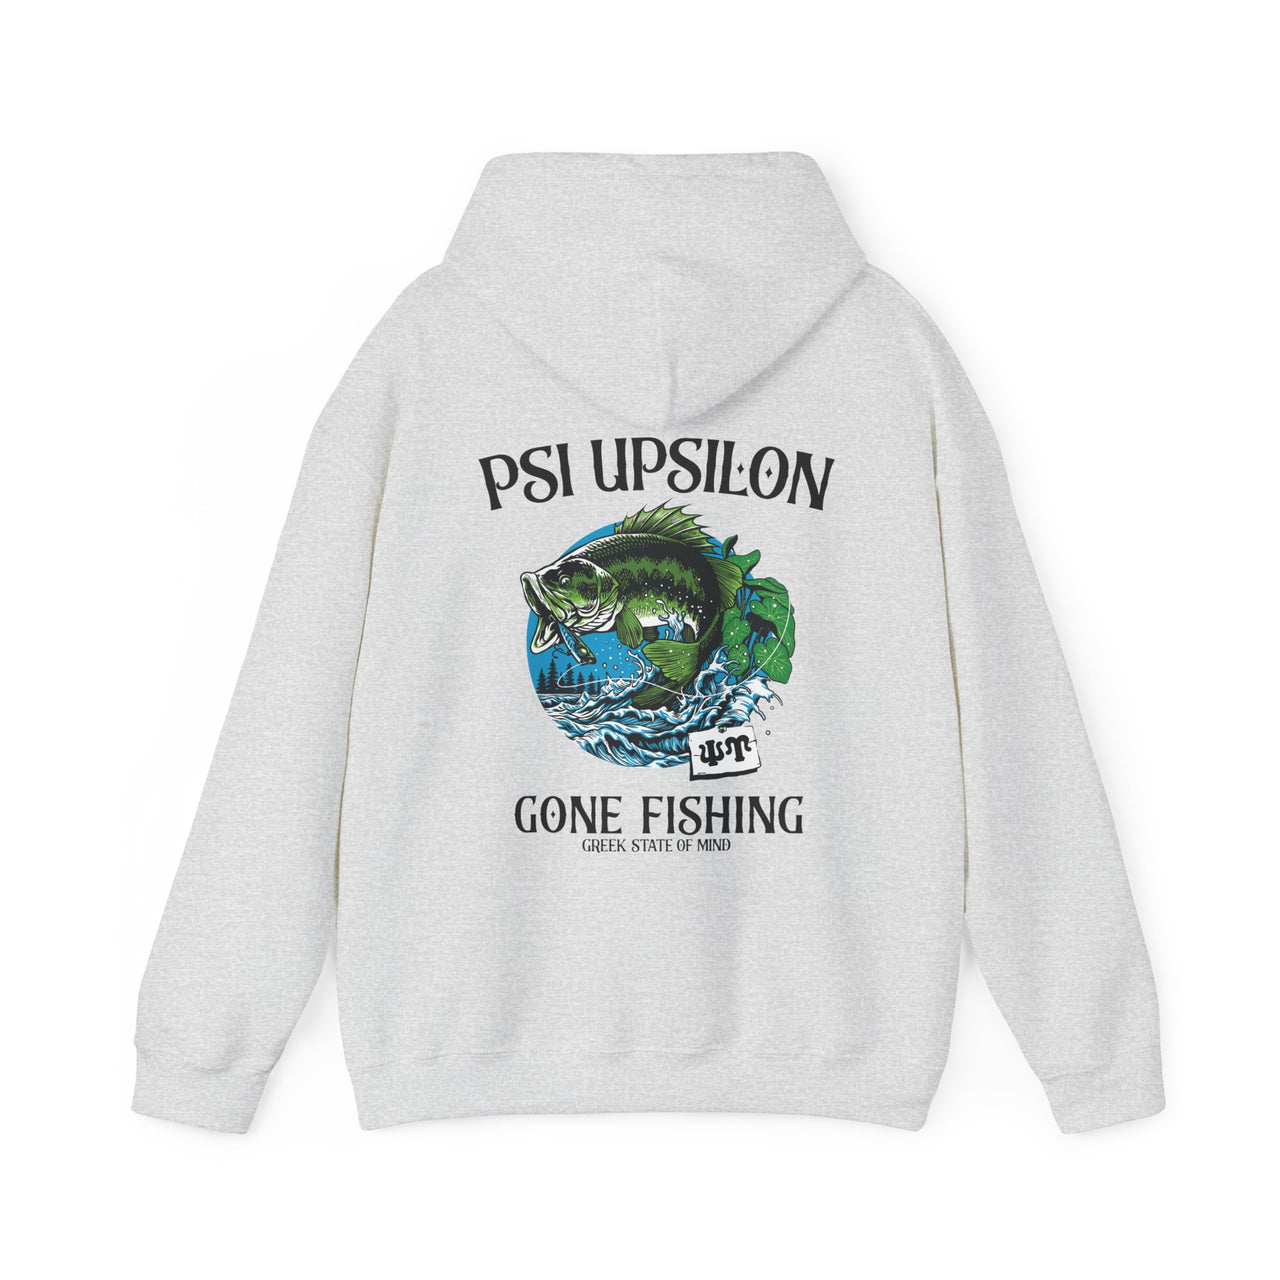 Psi Upsilon Graphic Hoodie | Gone Fishing